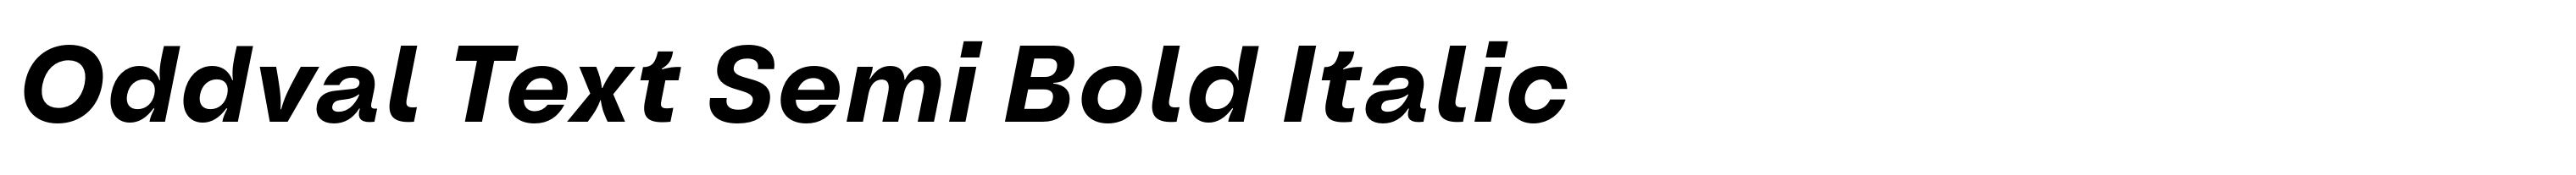 Oddval Text Semi Bold Italic